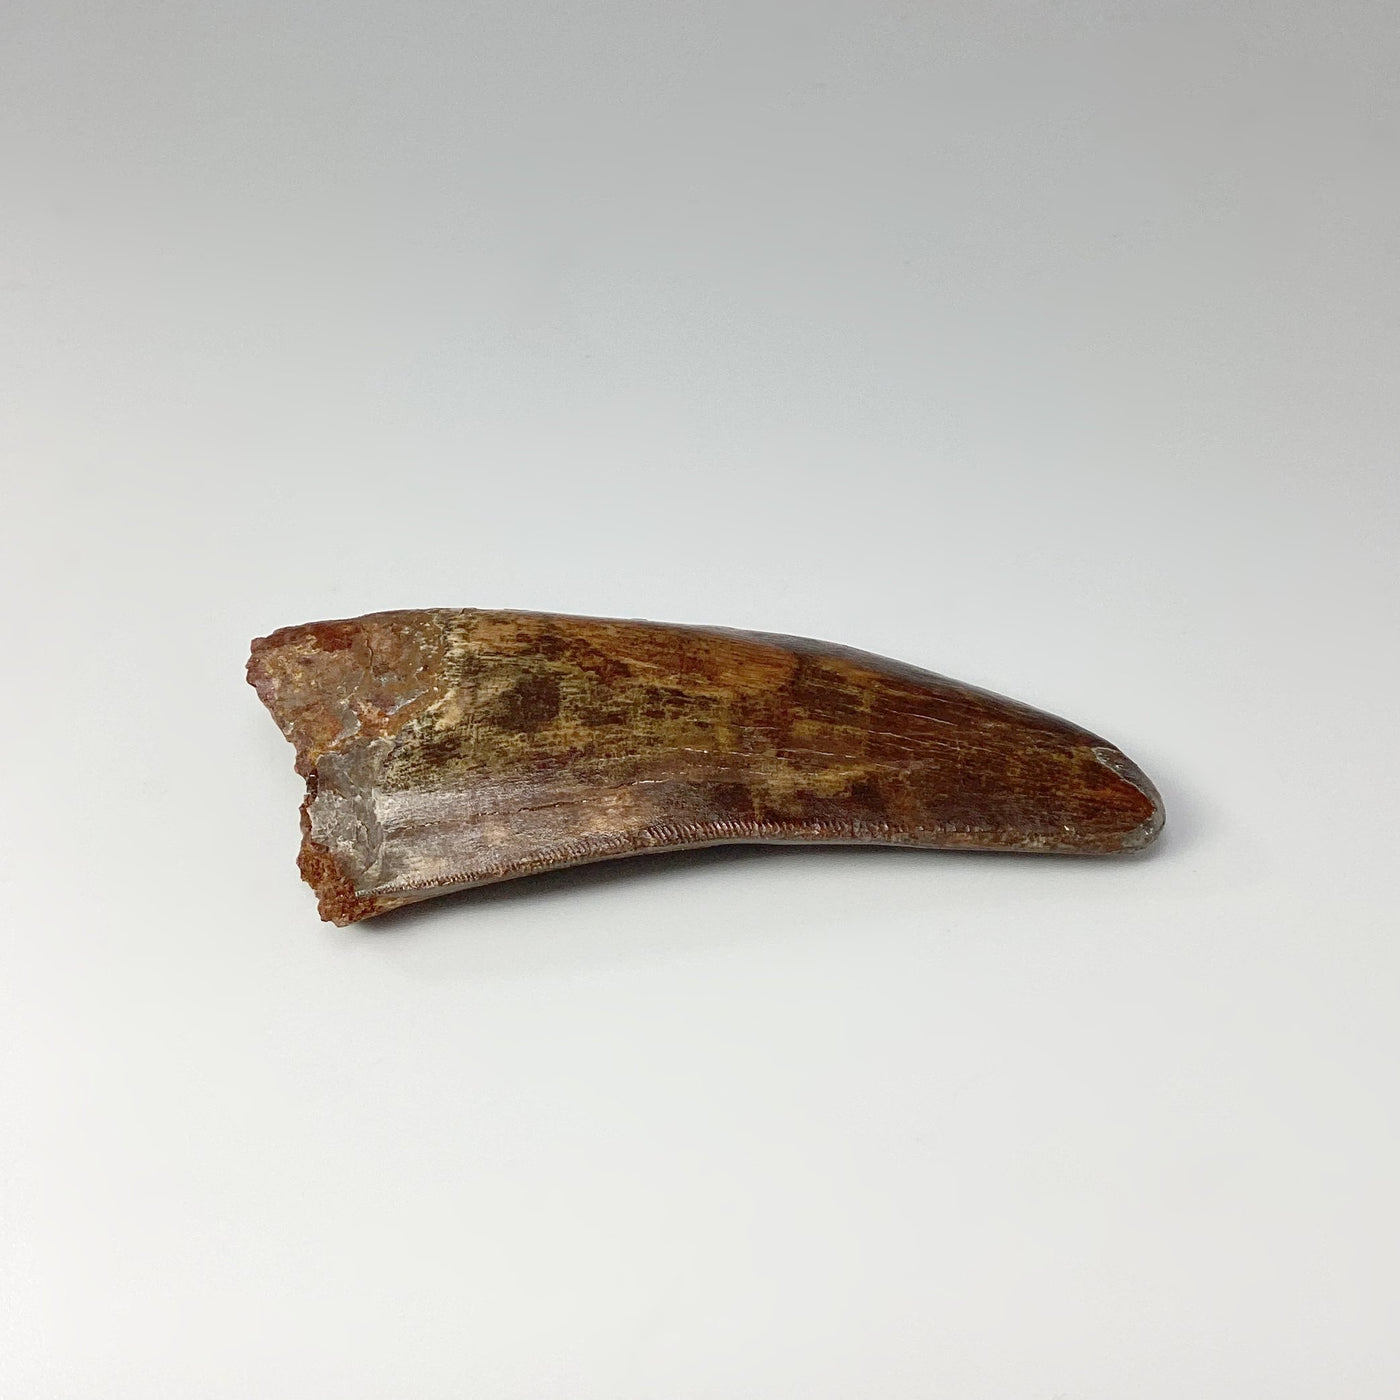 Fossilized Carcharodontosaurus Dinosaur Tooth Specimen